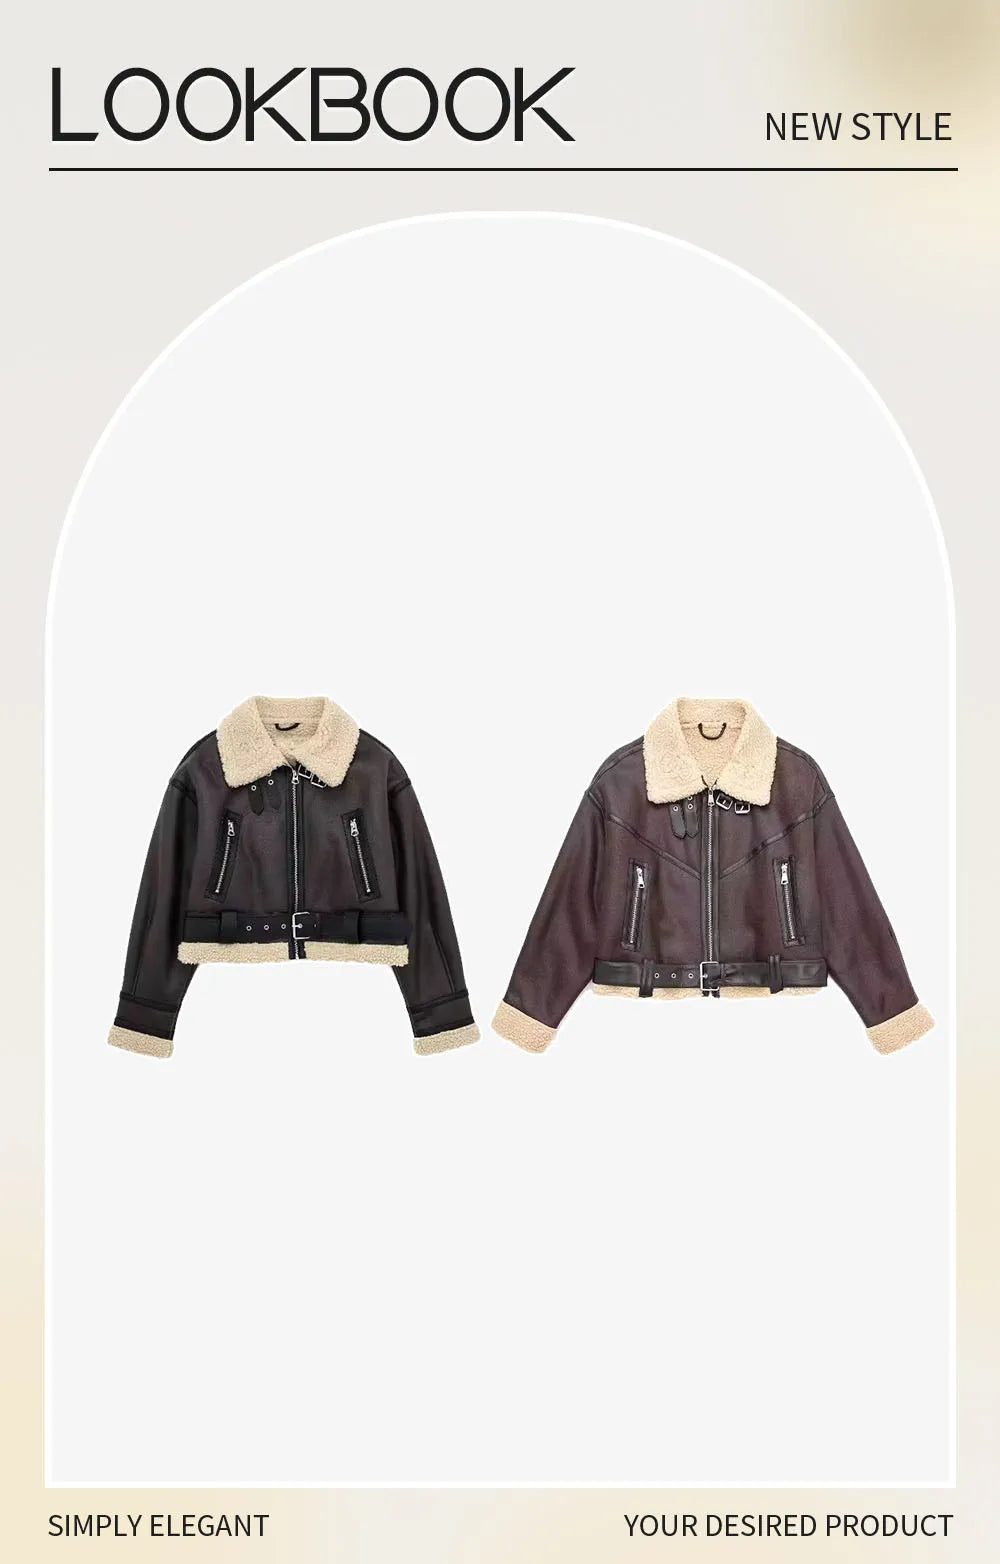 Autumn/Winter New Women's Wear New Fashion Casual Versatile Double sided Short Jacket Coat - Sellinashop